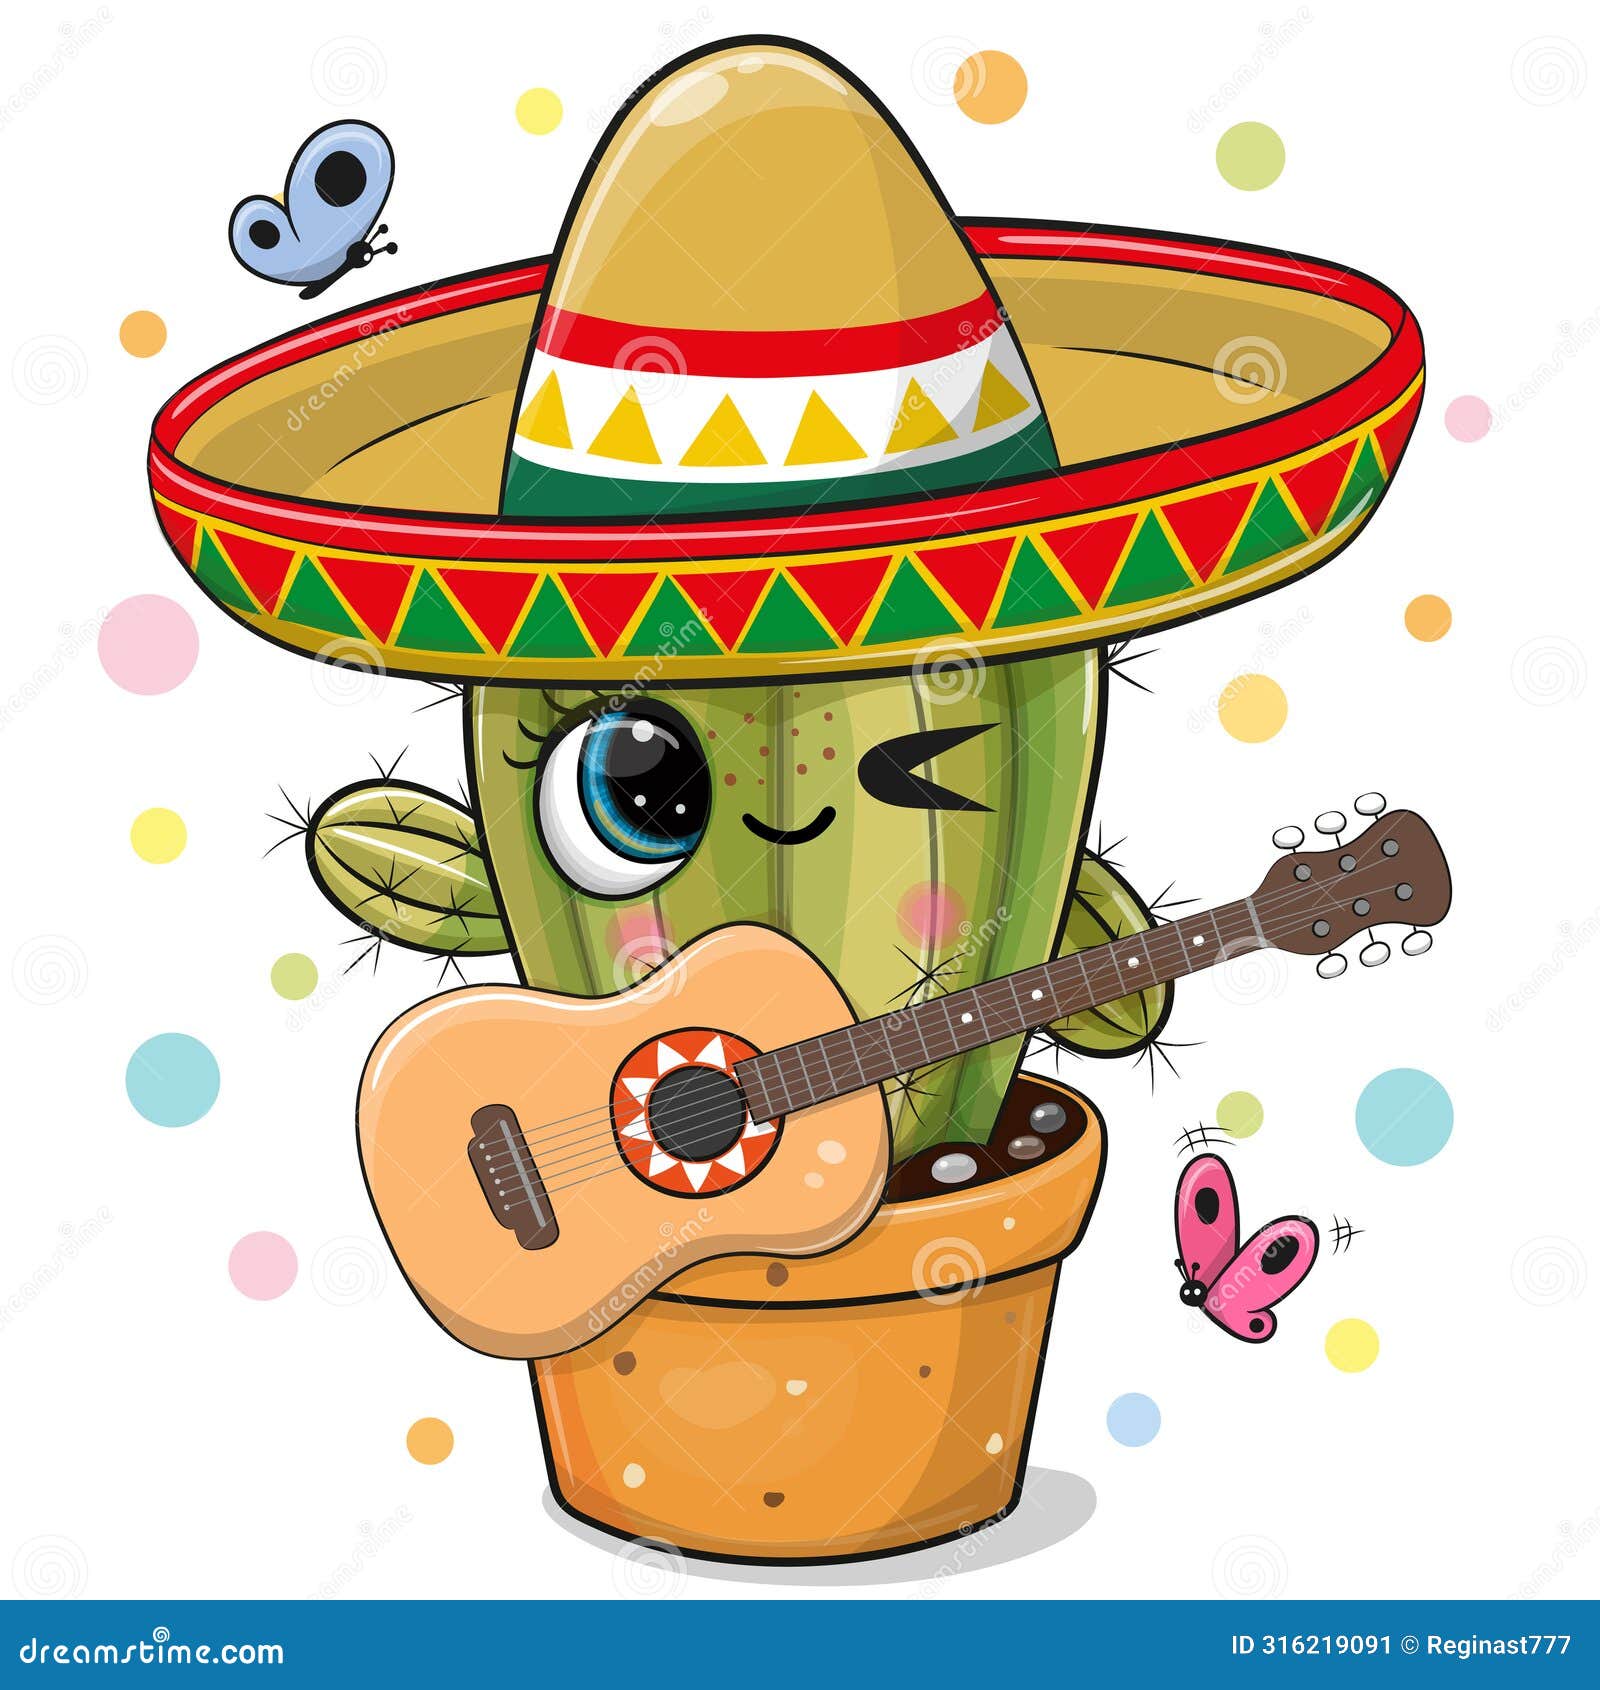 cartoon cactus wearing a sombrero with a guitar